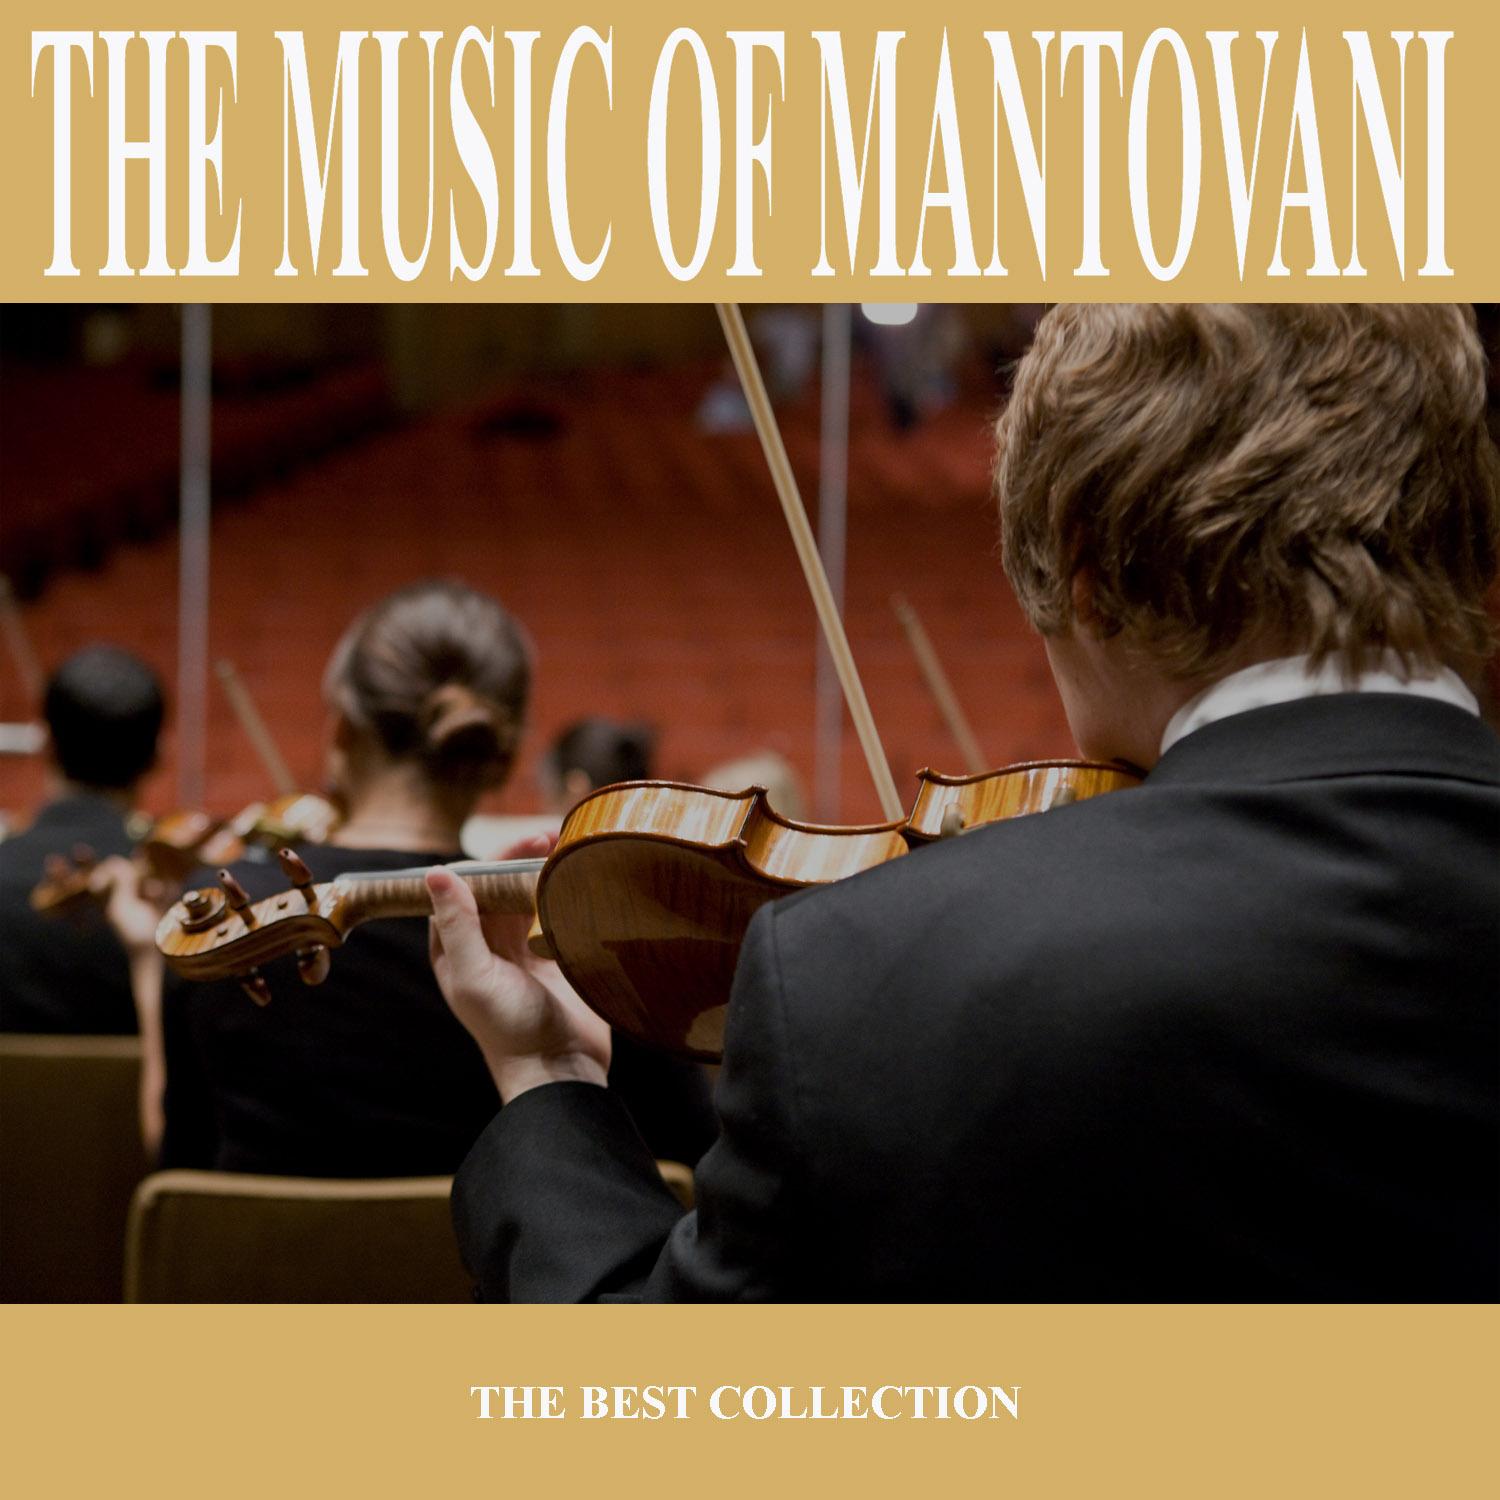 The Music of Mantovani